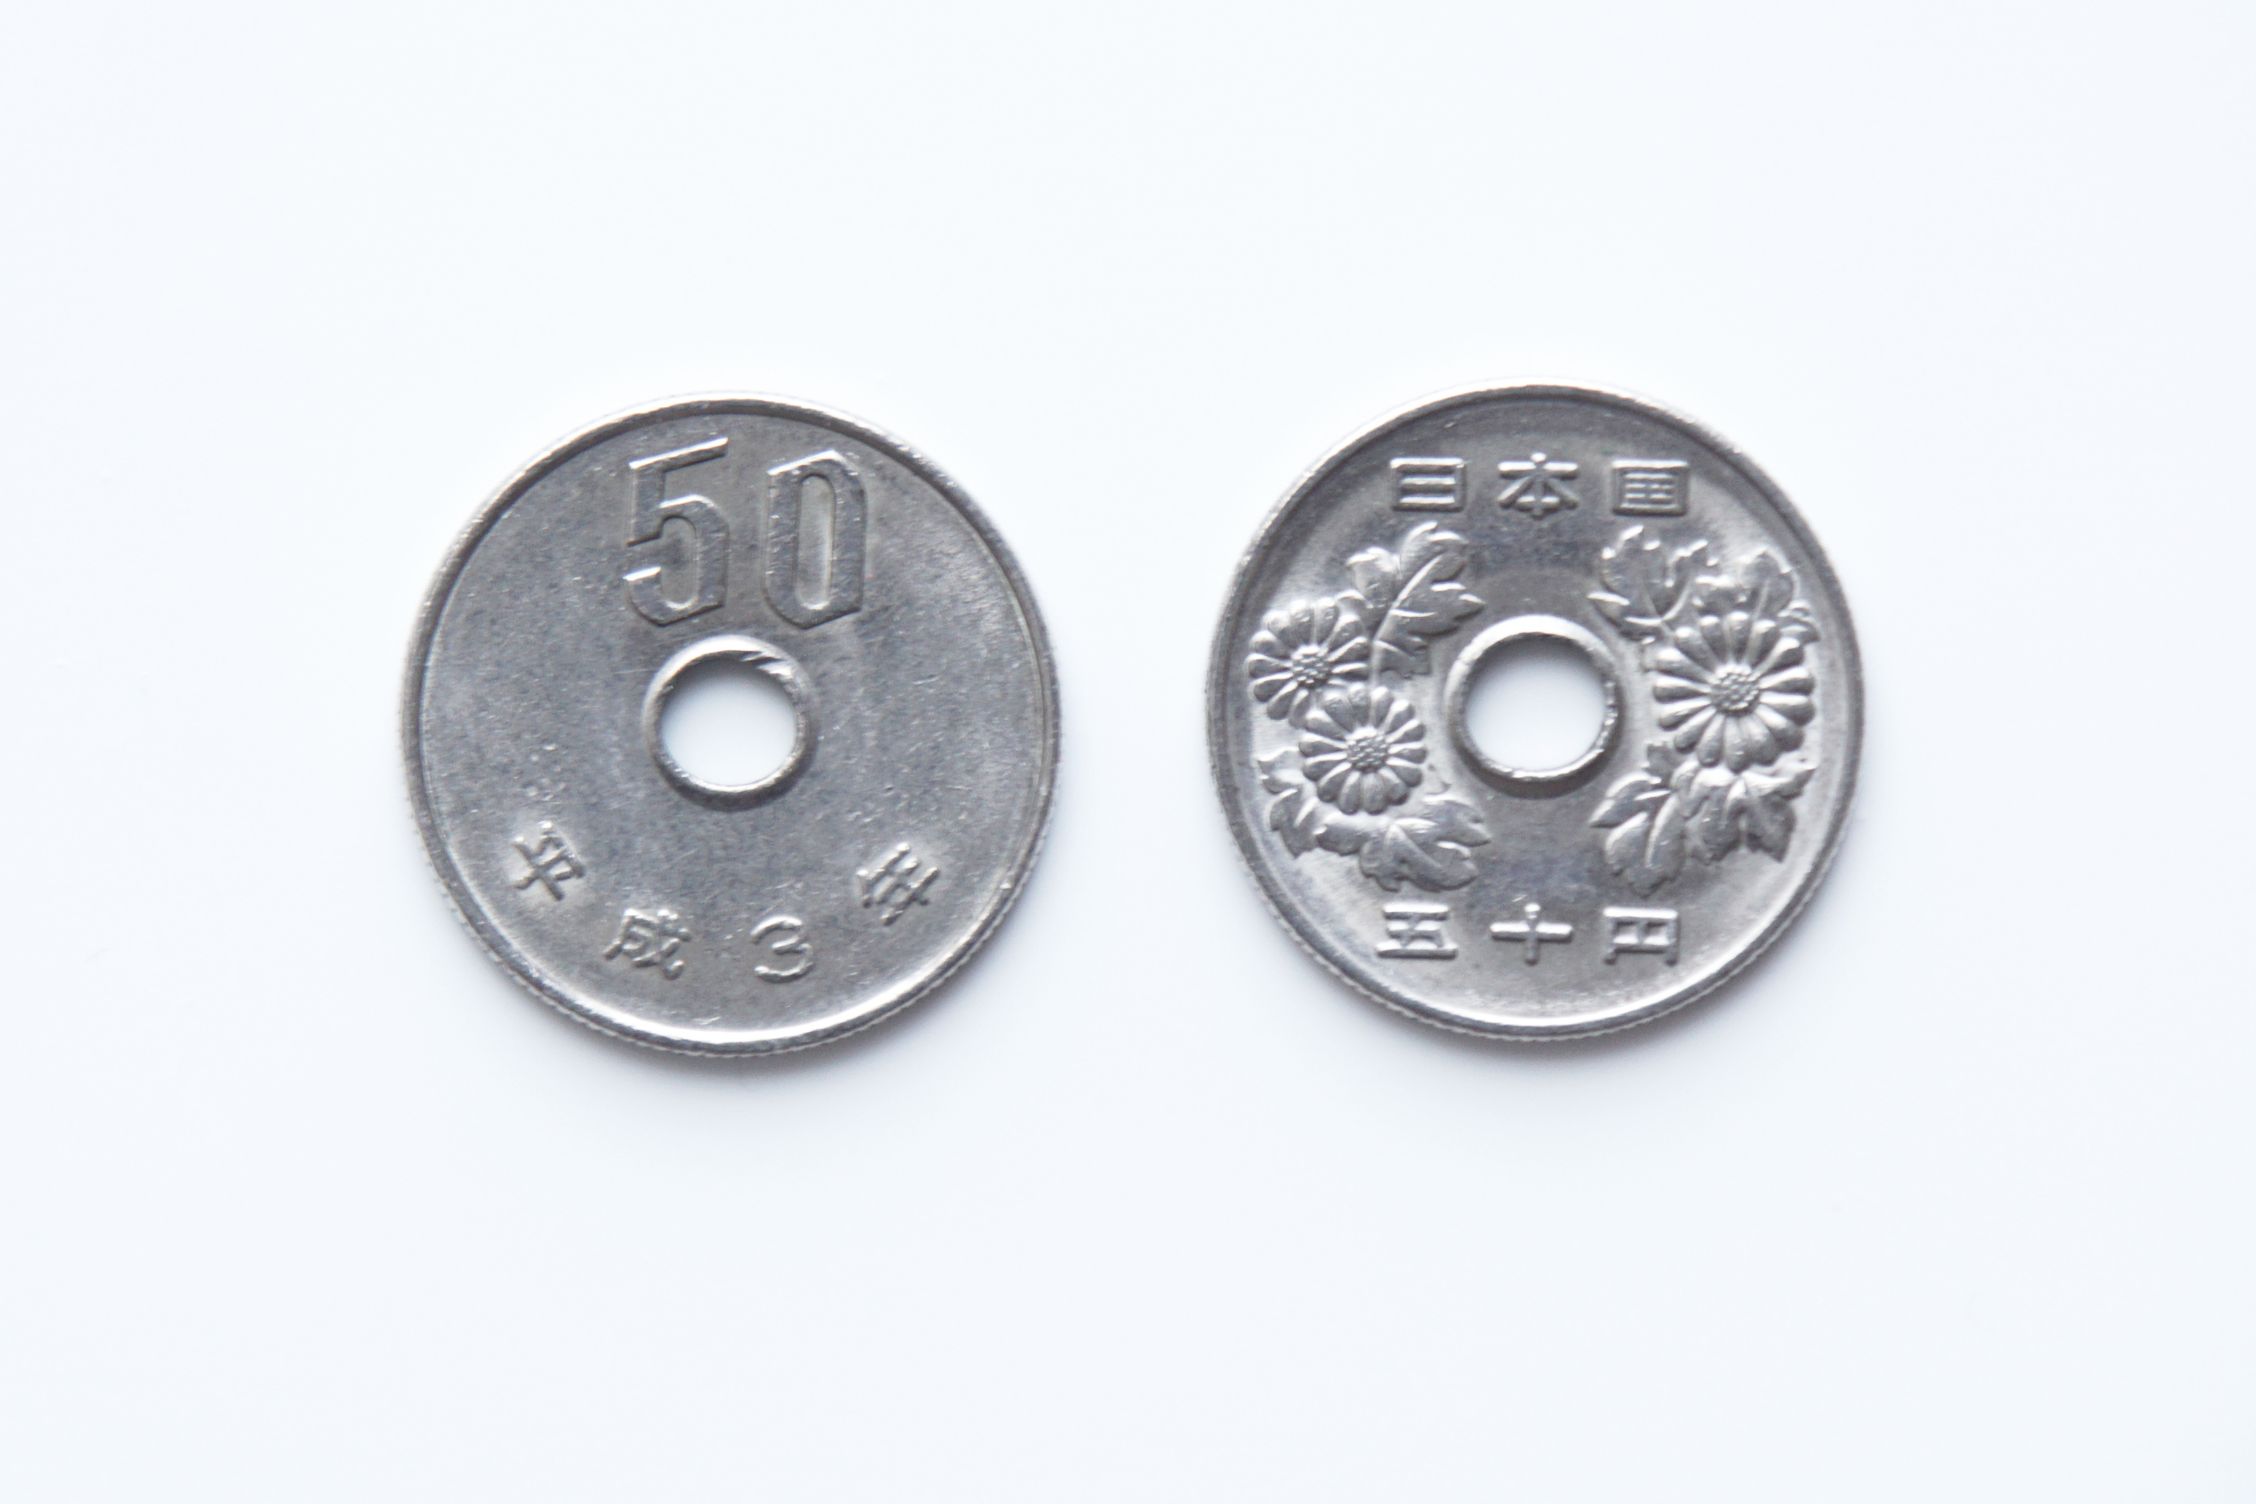 50 yen coin